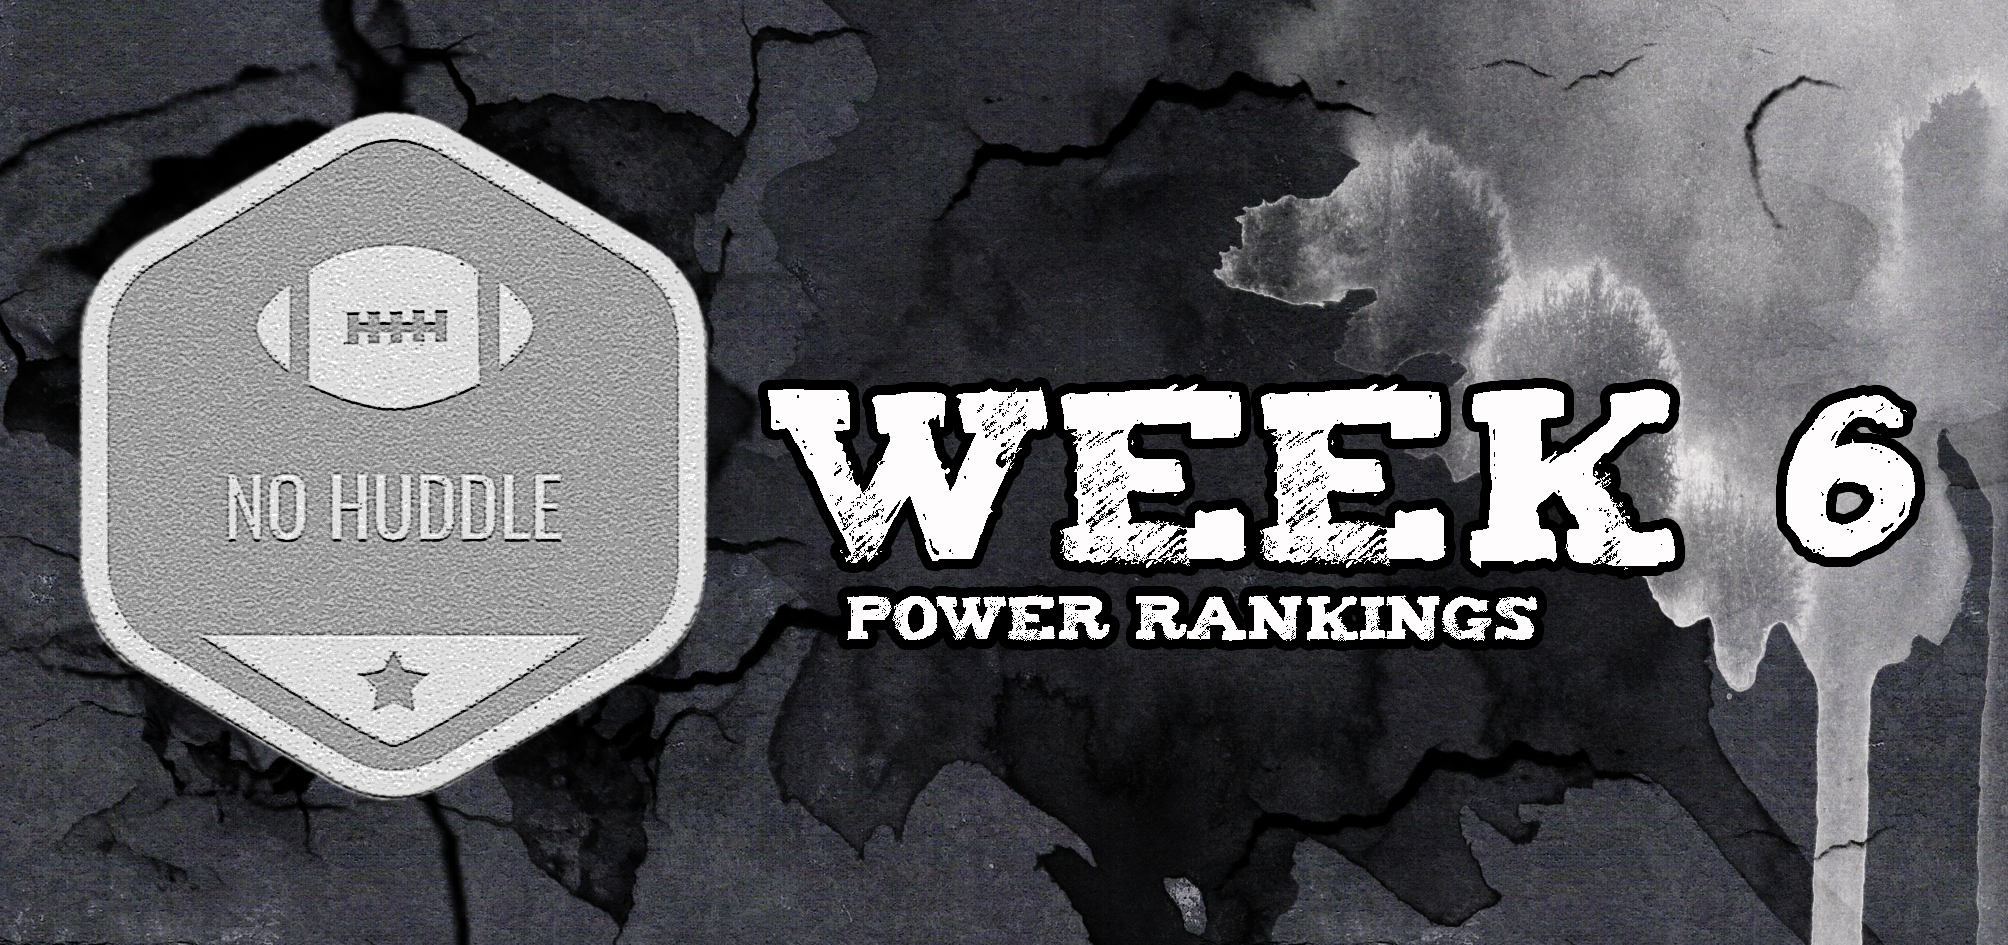 Power Rankings: Semana 6